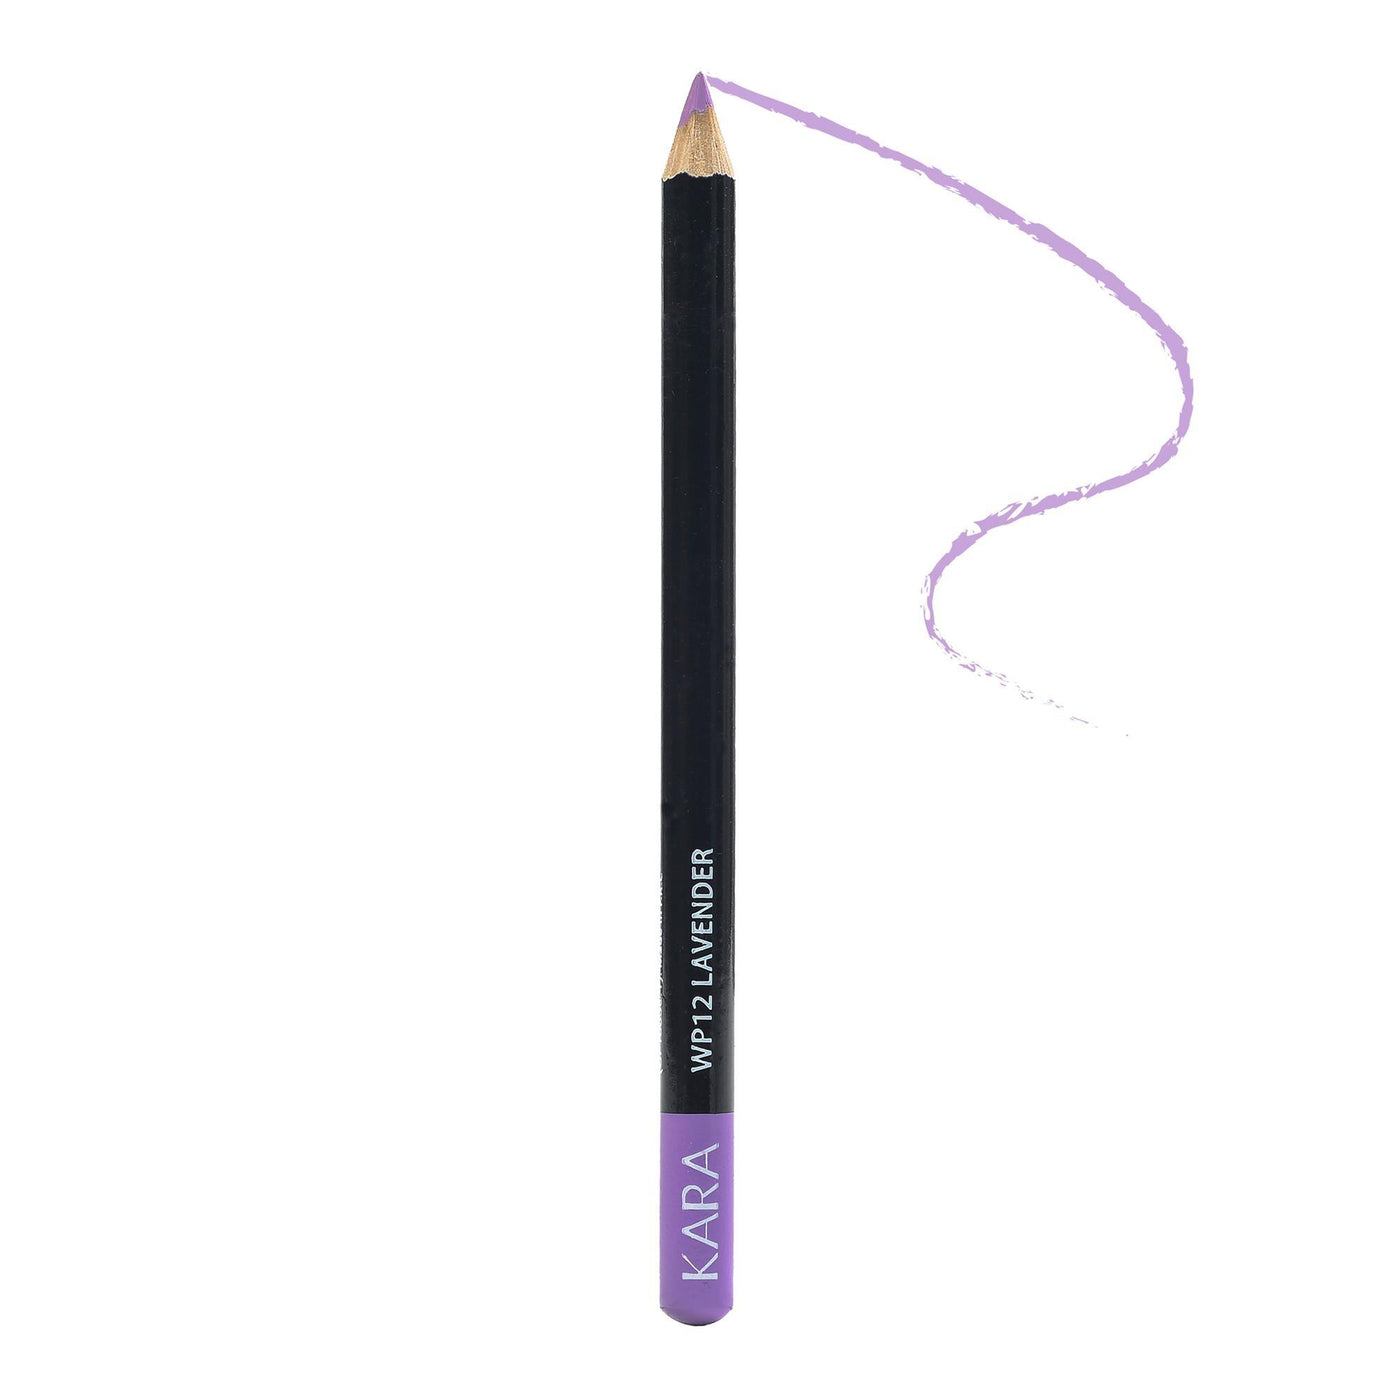 Kara Beauty Eye & Brow Liner Pencil - WP12 - Lavender